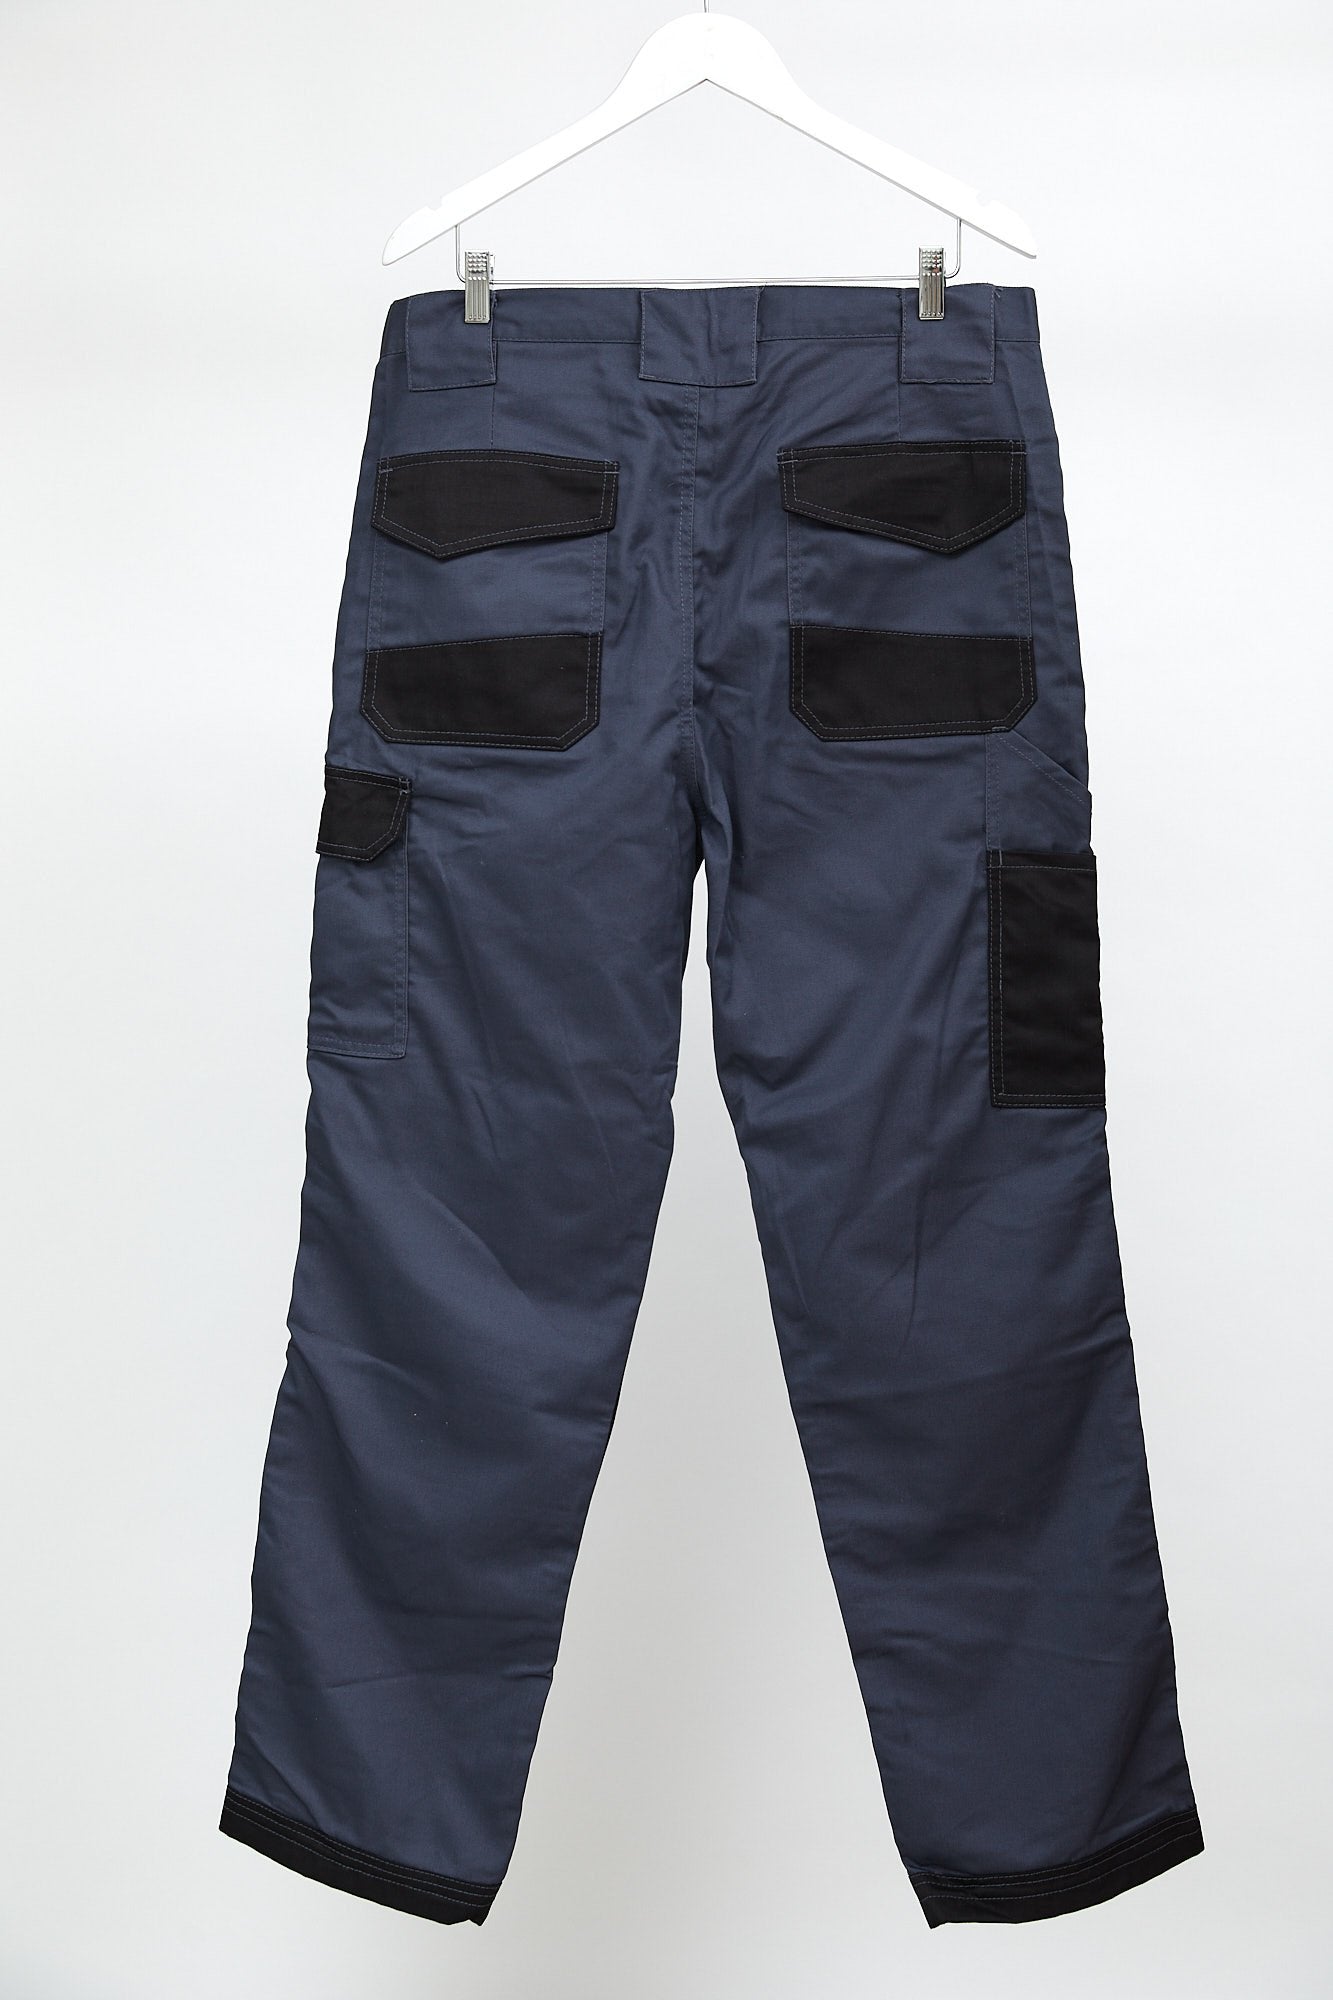 Mens Blue Workwear Trousers: Size W34